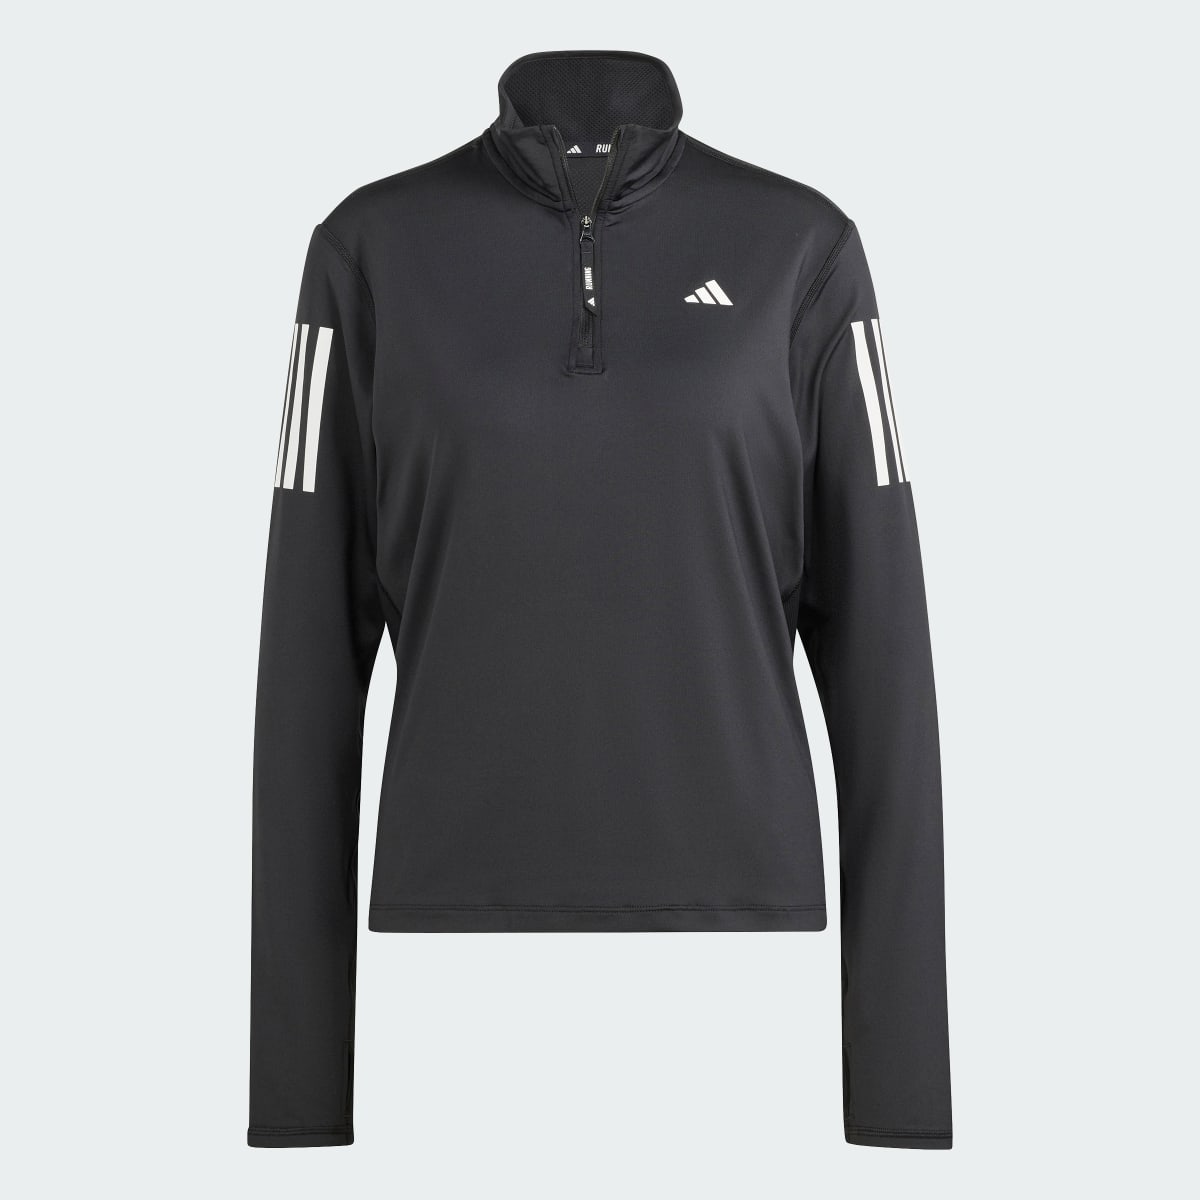 Adidas Own the Run Half-Zip Jacket. 5